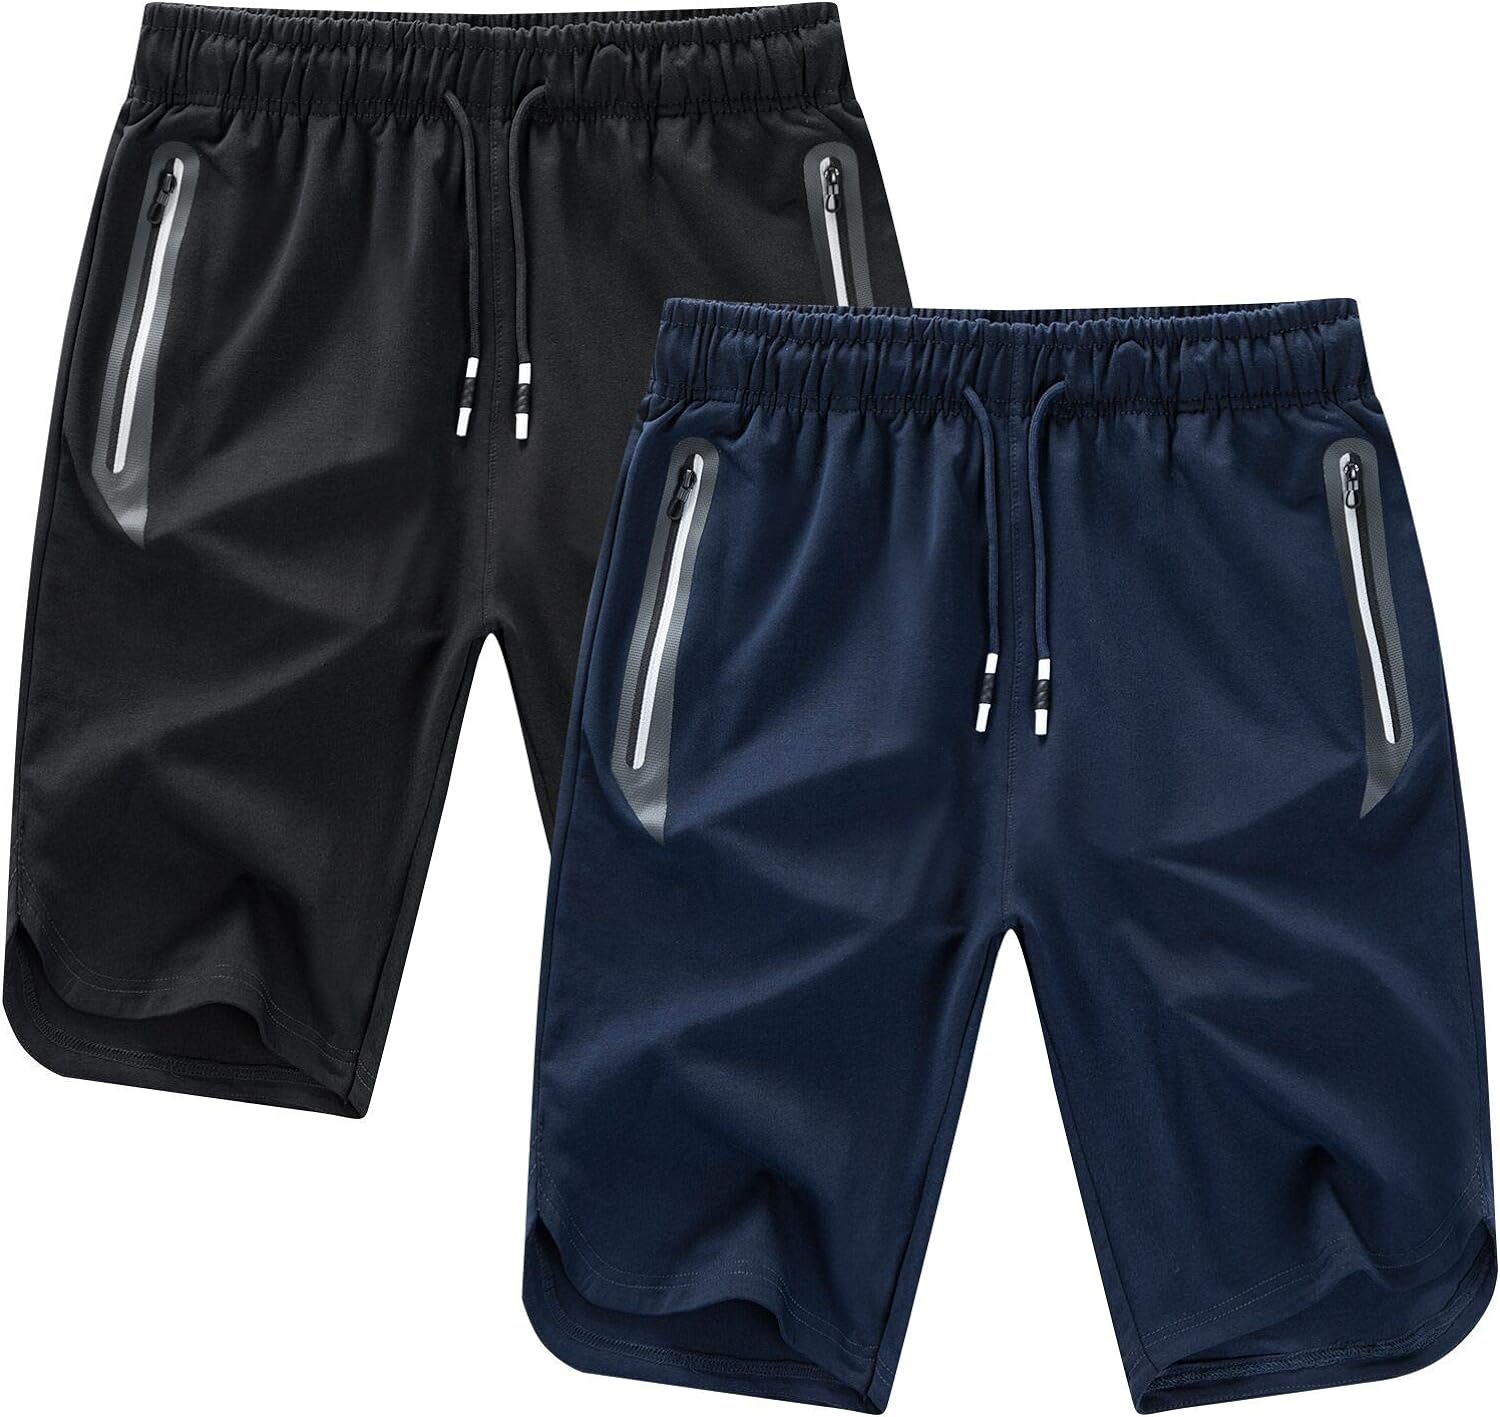 Thobisy Mens Shorts Casual Workout Shorts Drawstring Zipper Pockets Elastic Waist 